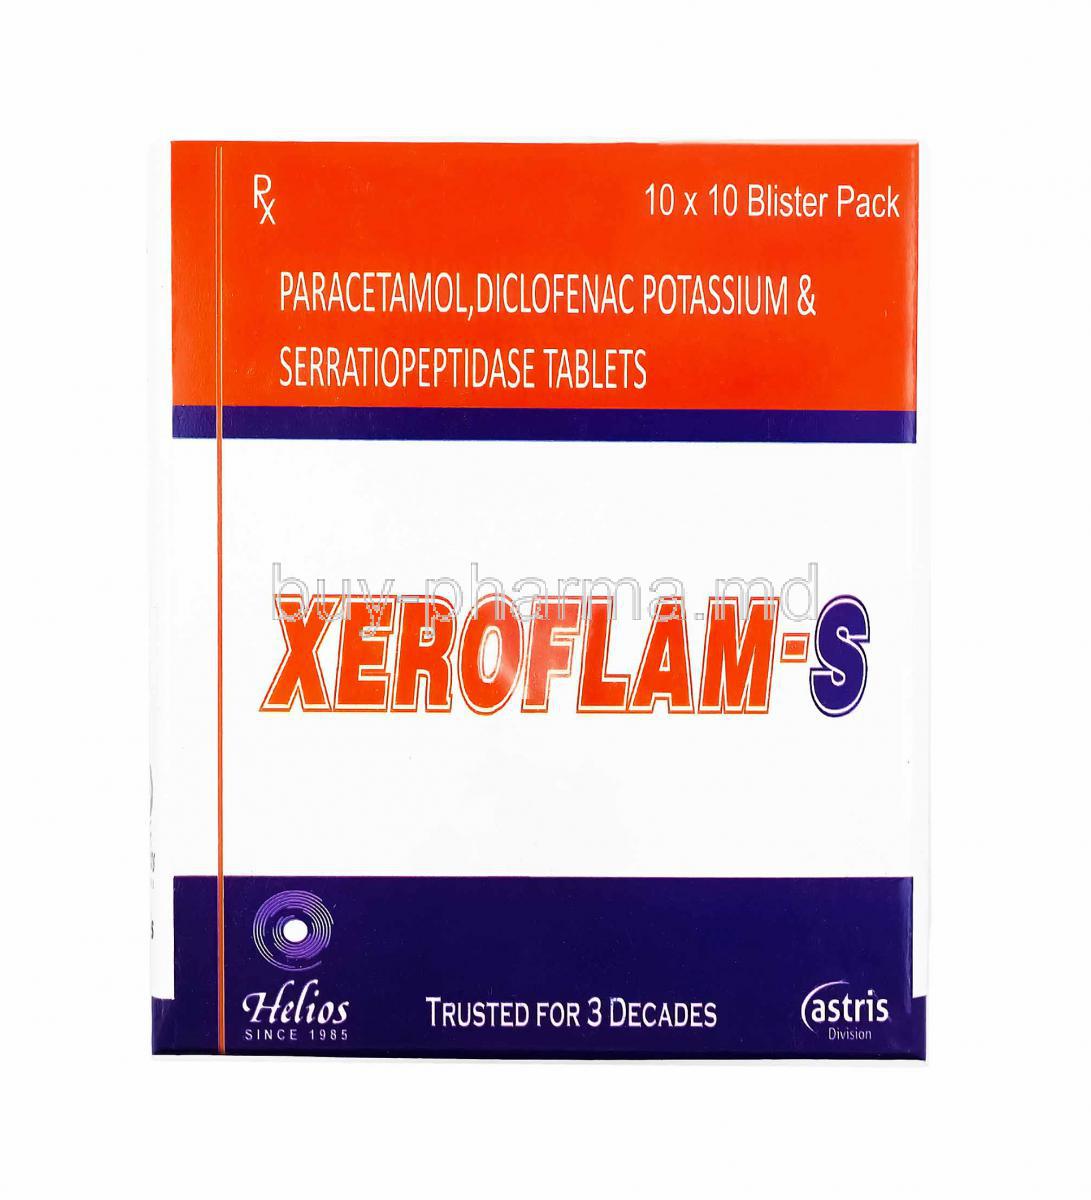 Xeroflam S, Diclofenac, Paracetamol and Serratiopeptidase